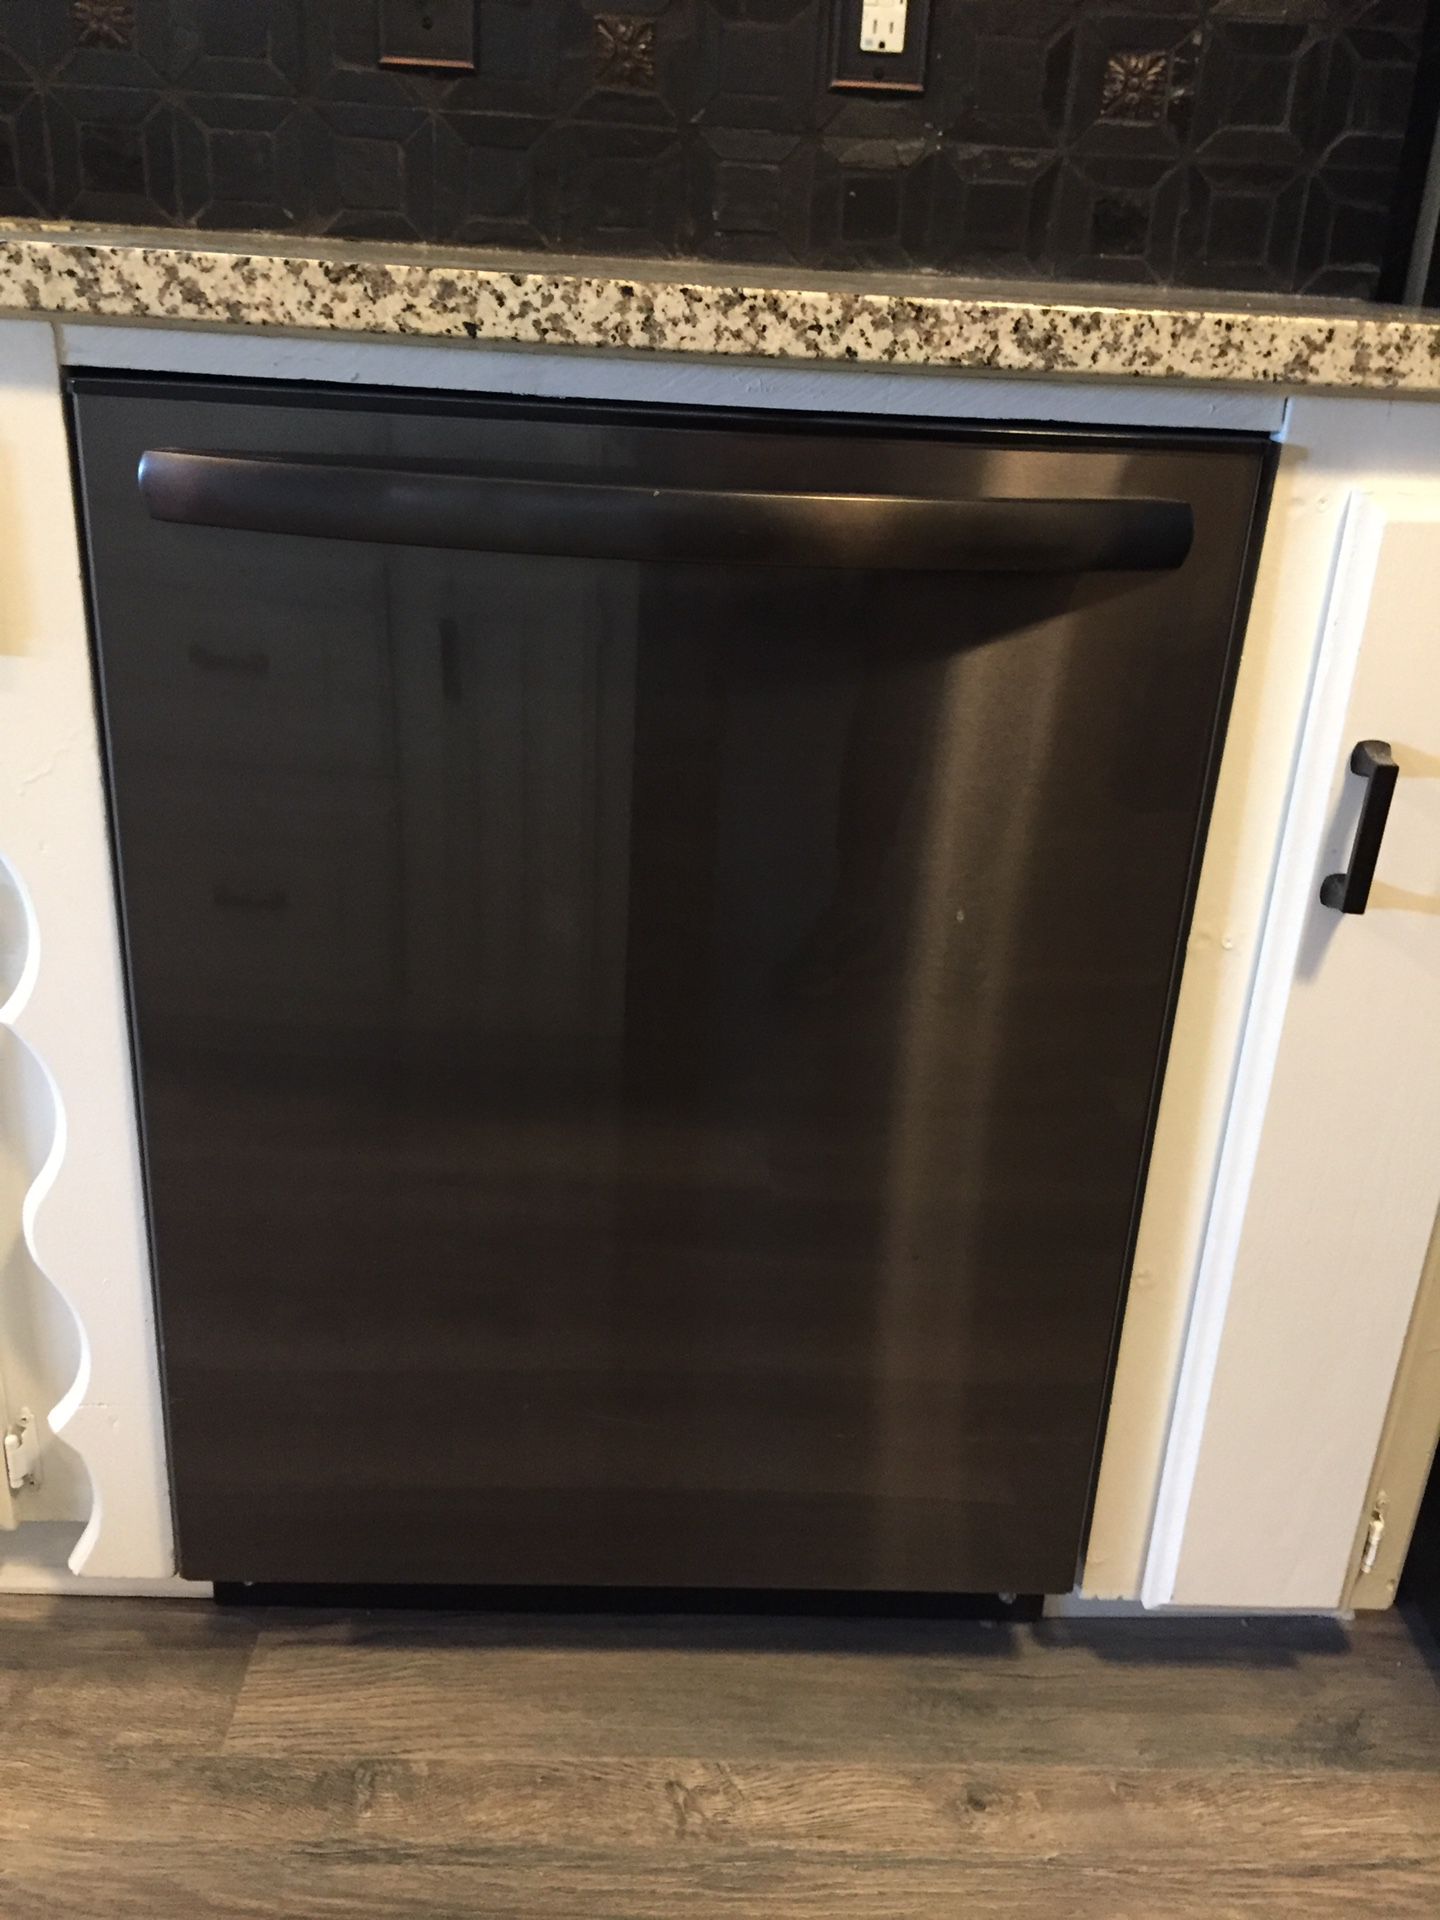 $175 Frigidaire Dishwasher in Black Stainless Steel